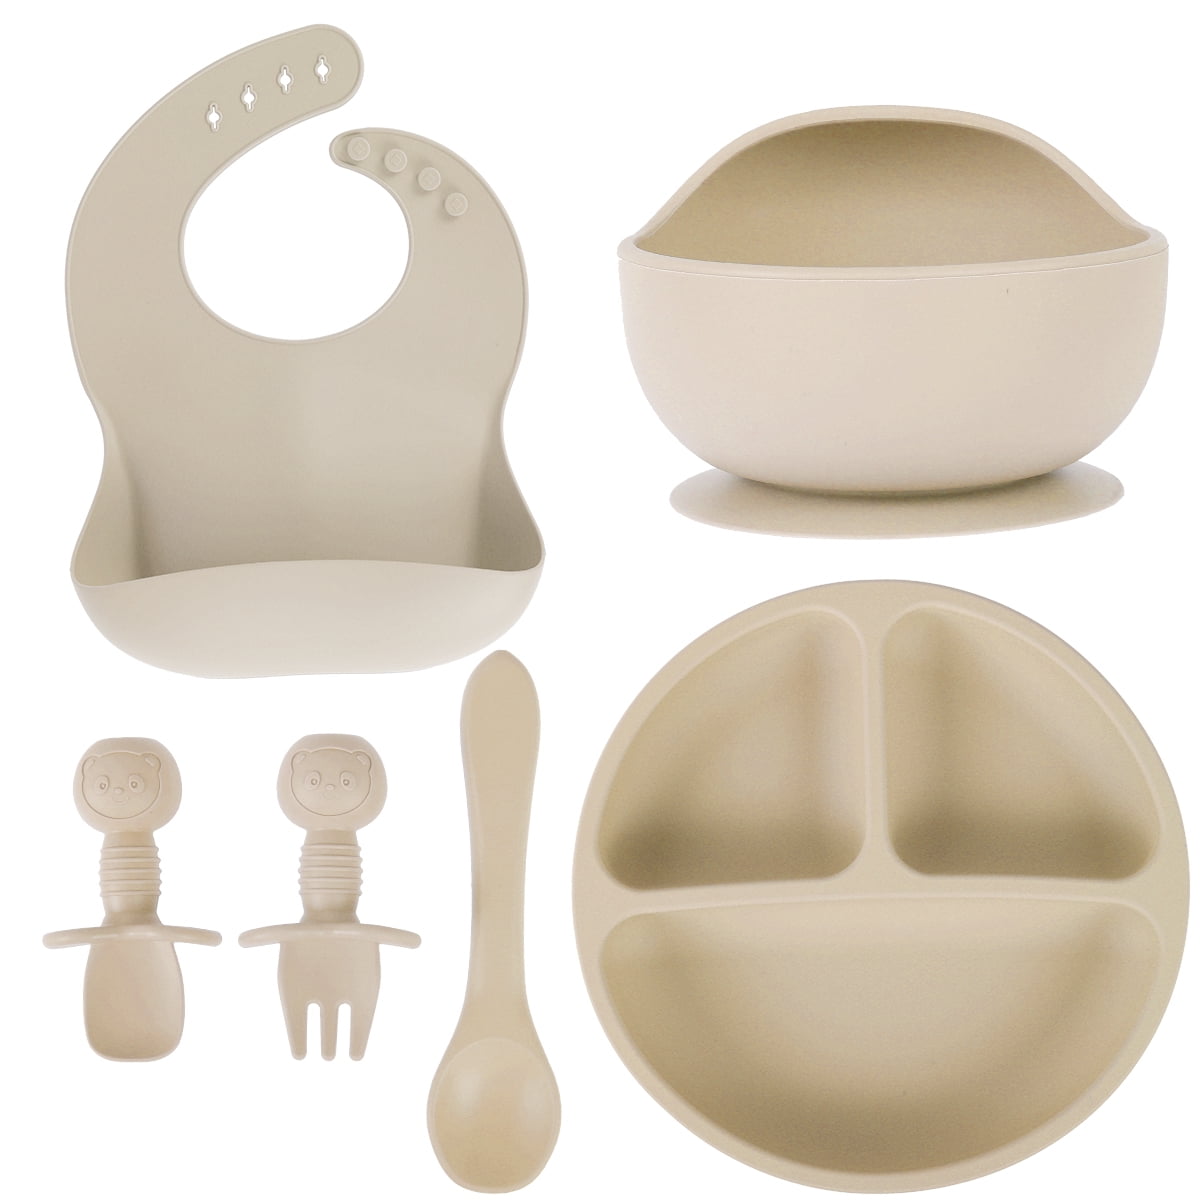 mushie Silicone Suction Bowl | BPA-Free Non-Slip Design (Ivory)